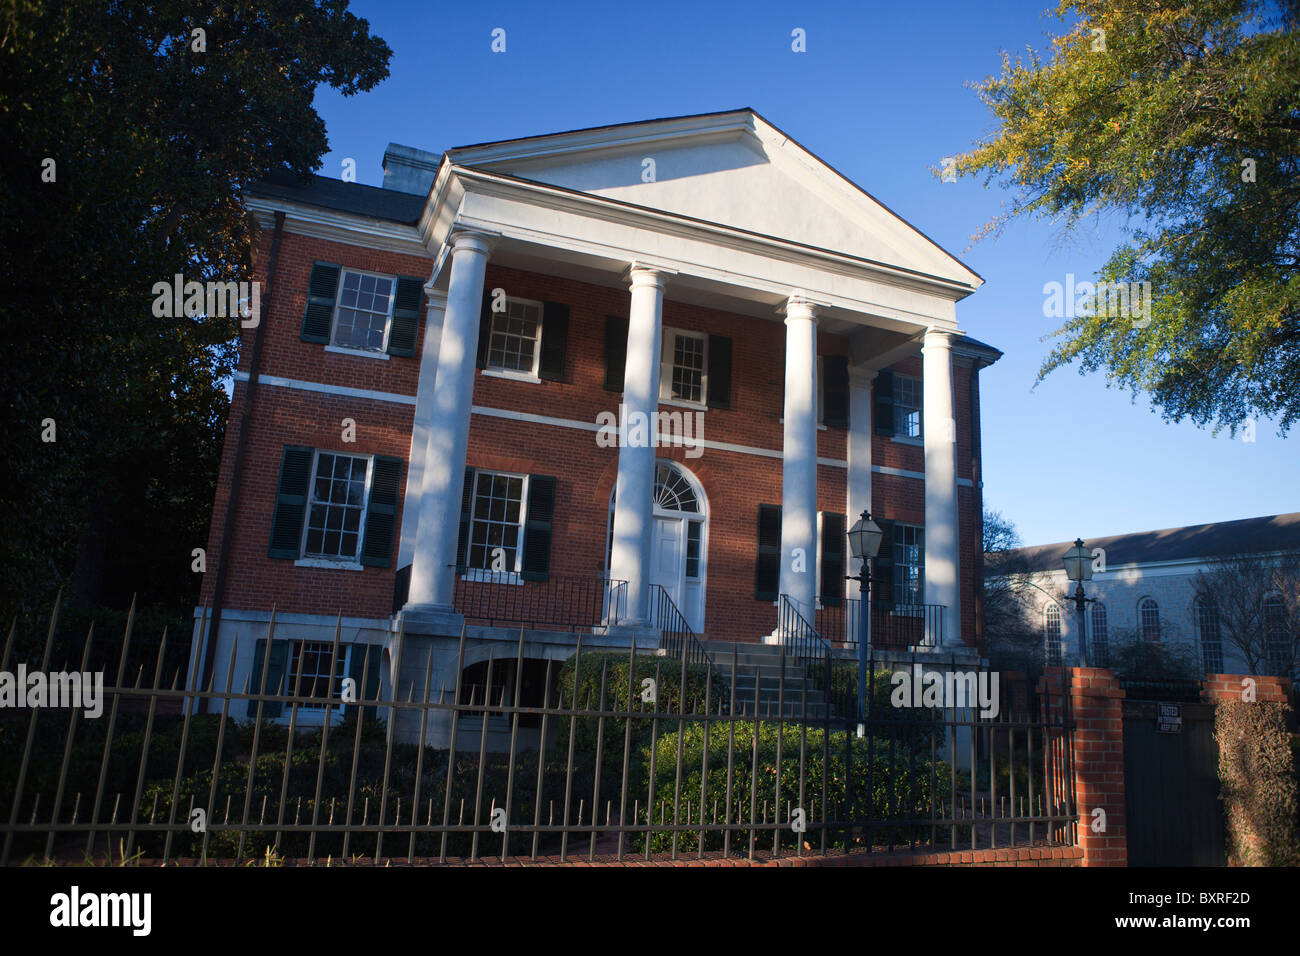 Exterior of DeBruhl-Marshall House, Columbia, South Carolina, United States of America Stock Photo